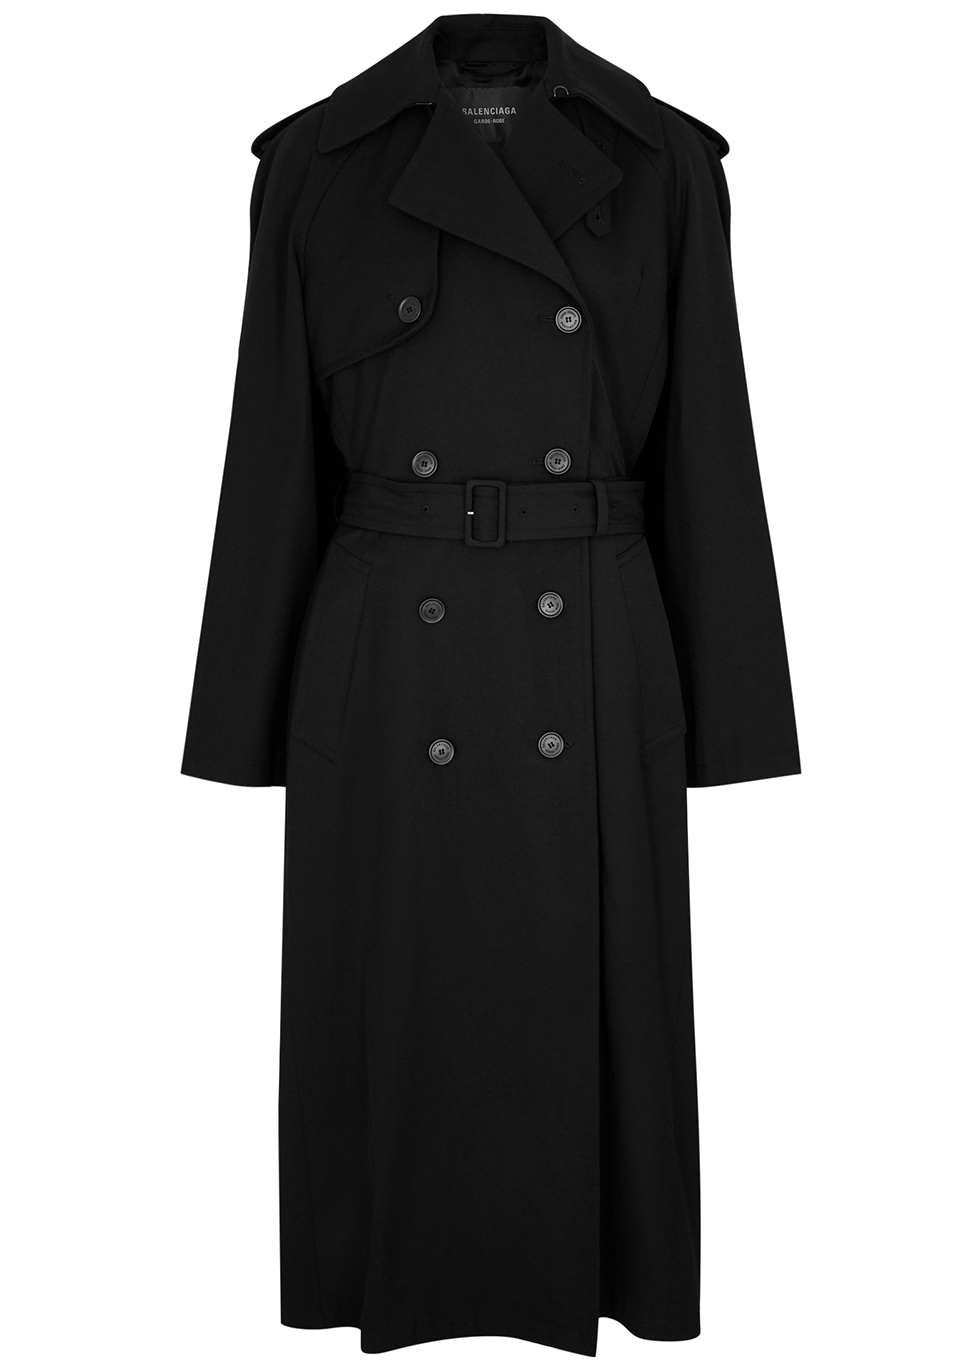 BALENCIAGA Hybrid over coat  Black  Balenciaga coat 658924 TKT08 online  on GIGLIOCOM